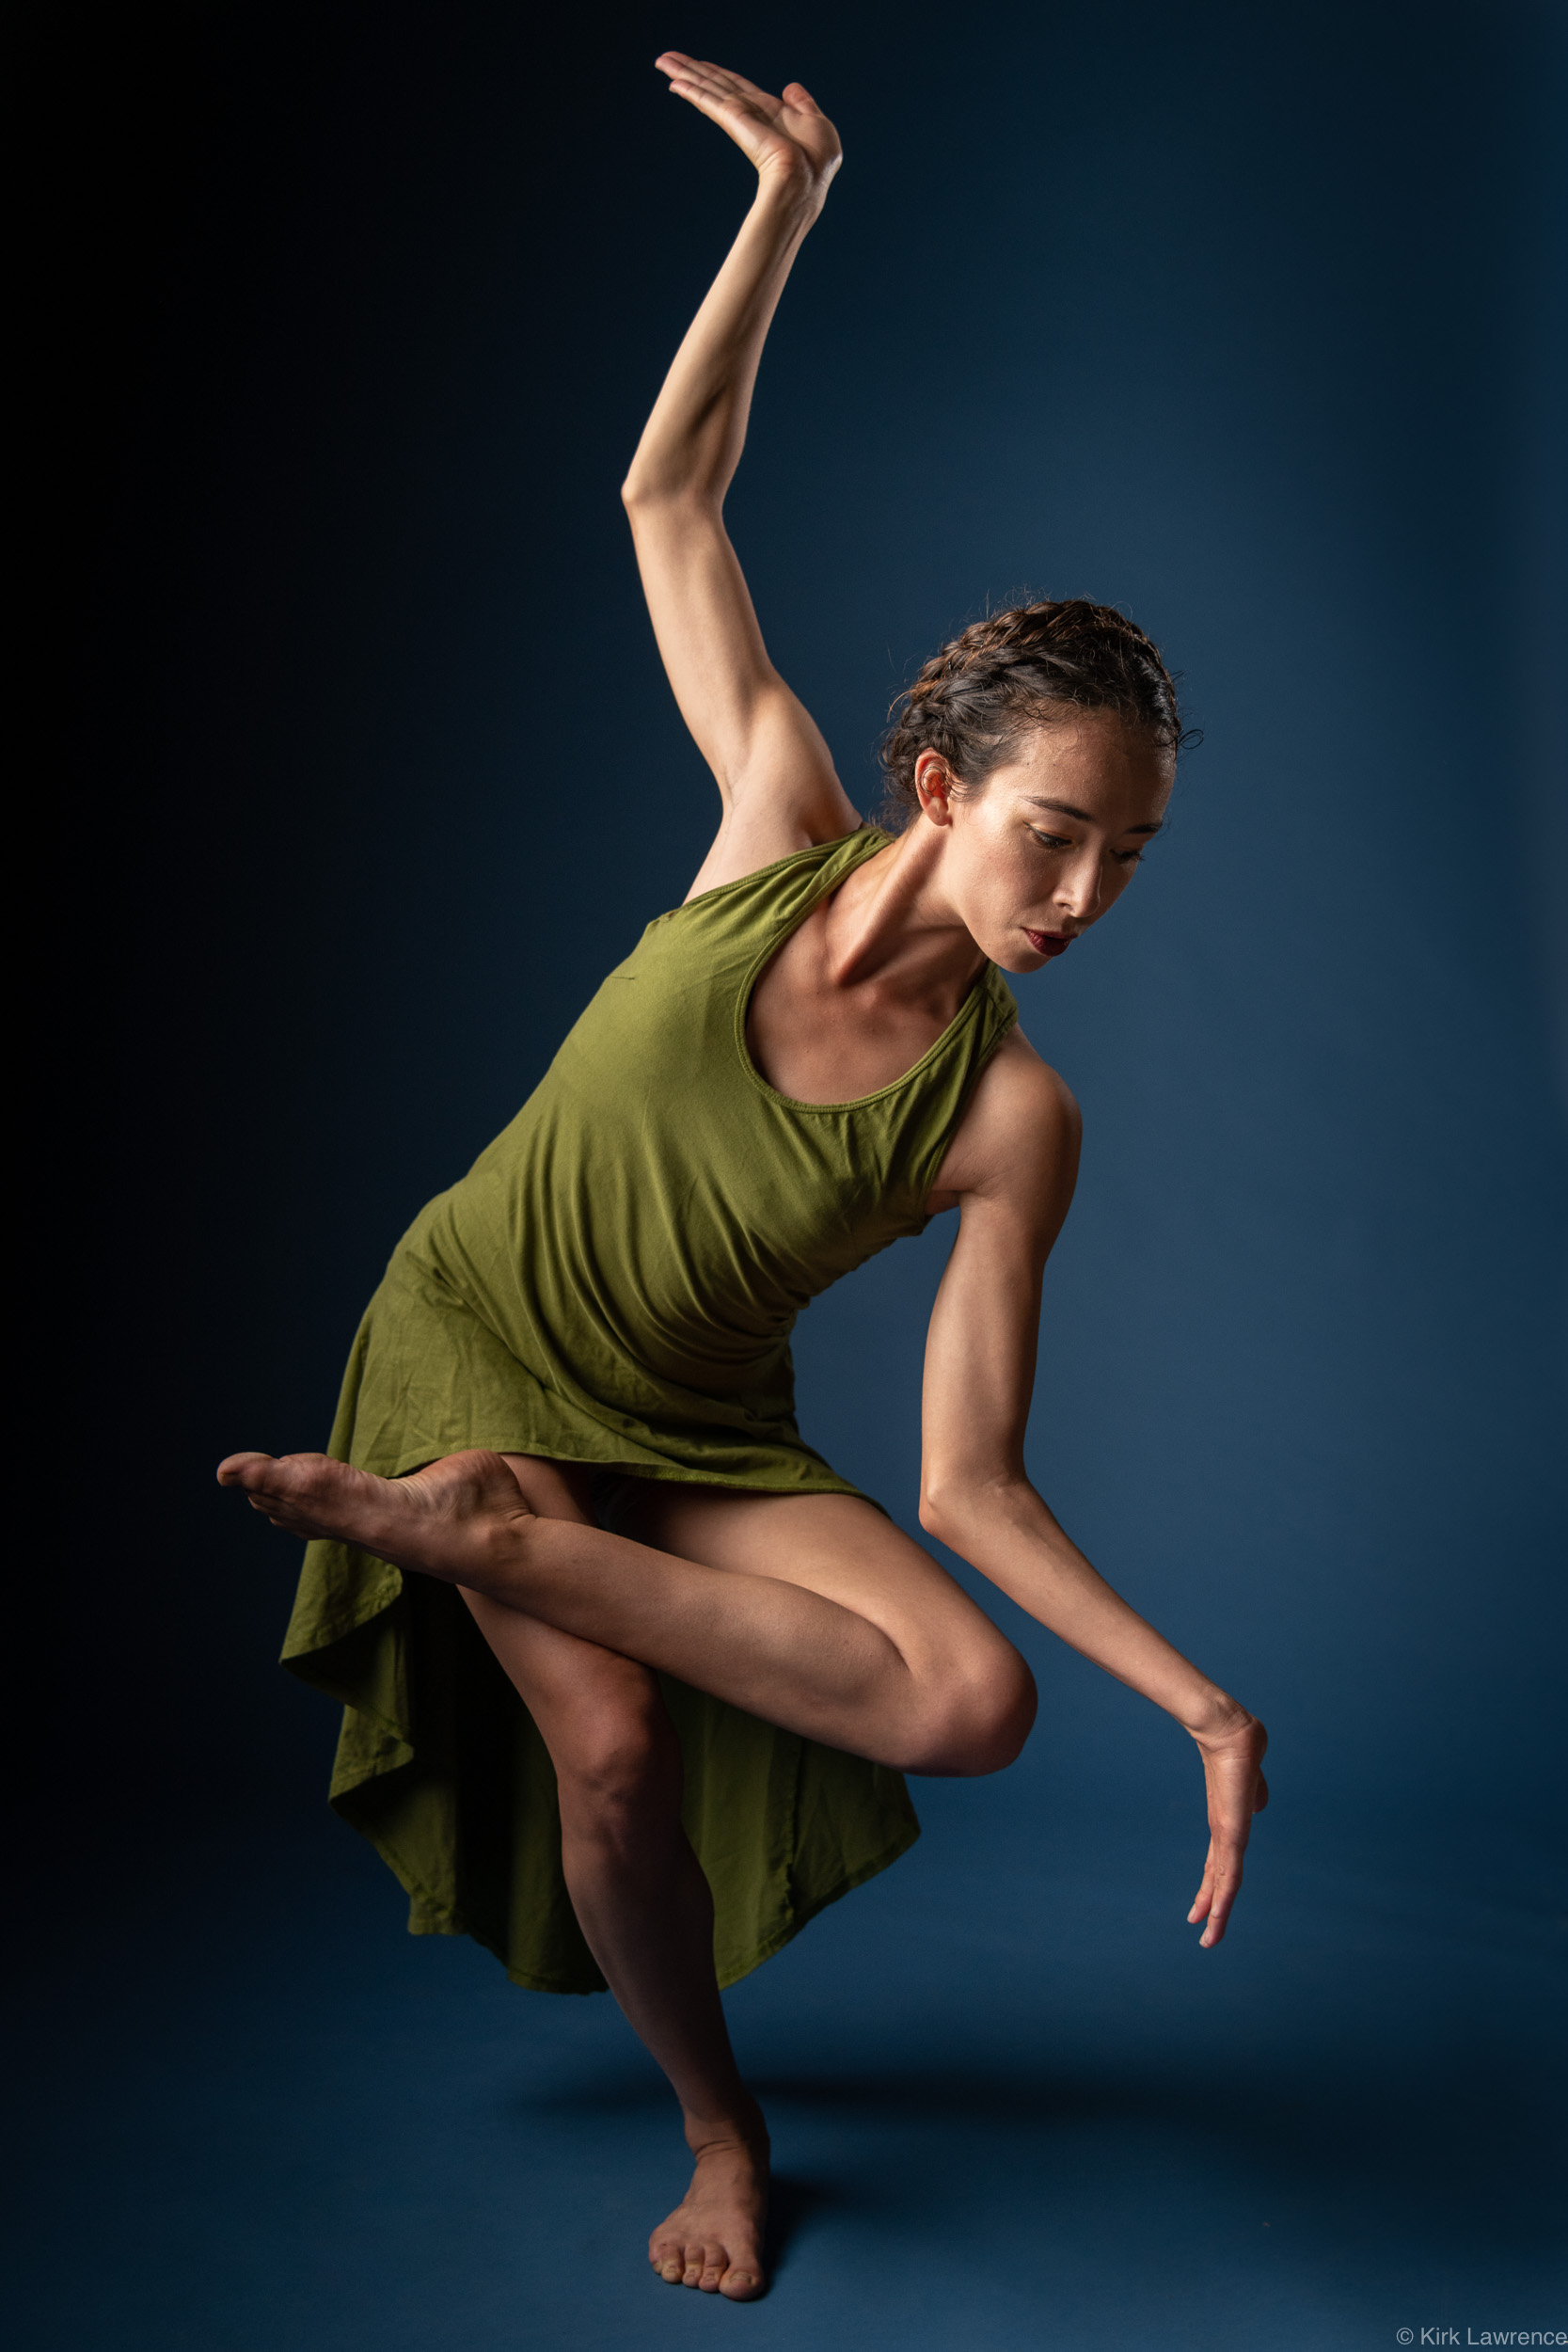 modern_dancer_balancing_green_dress.jpg